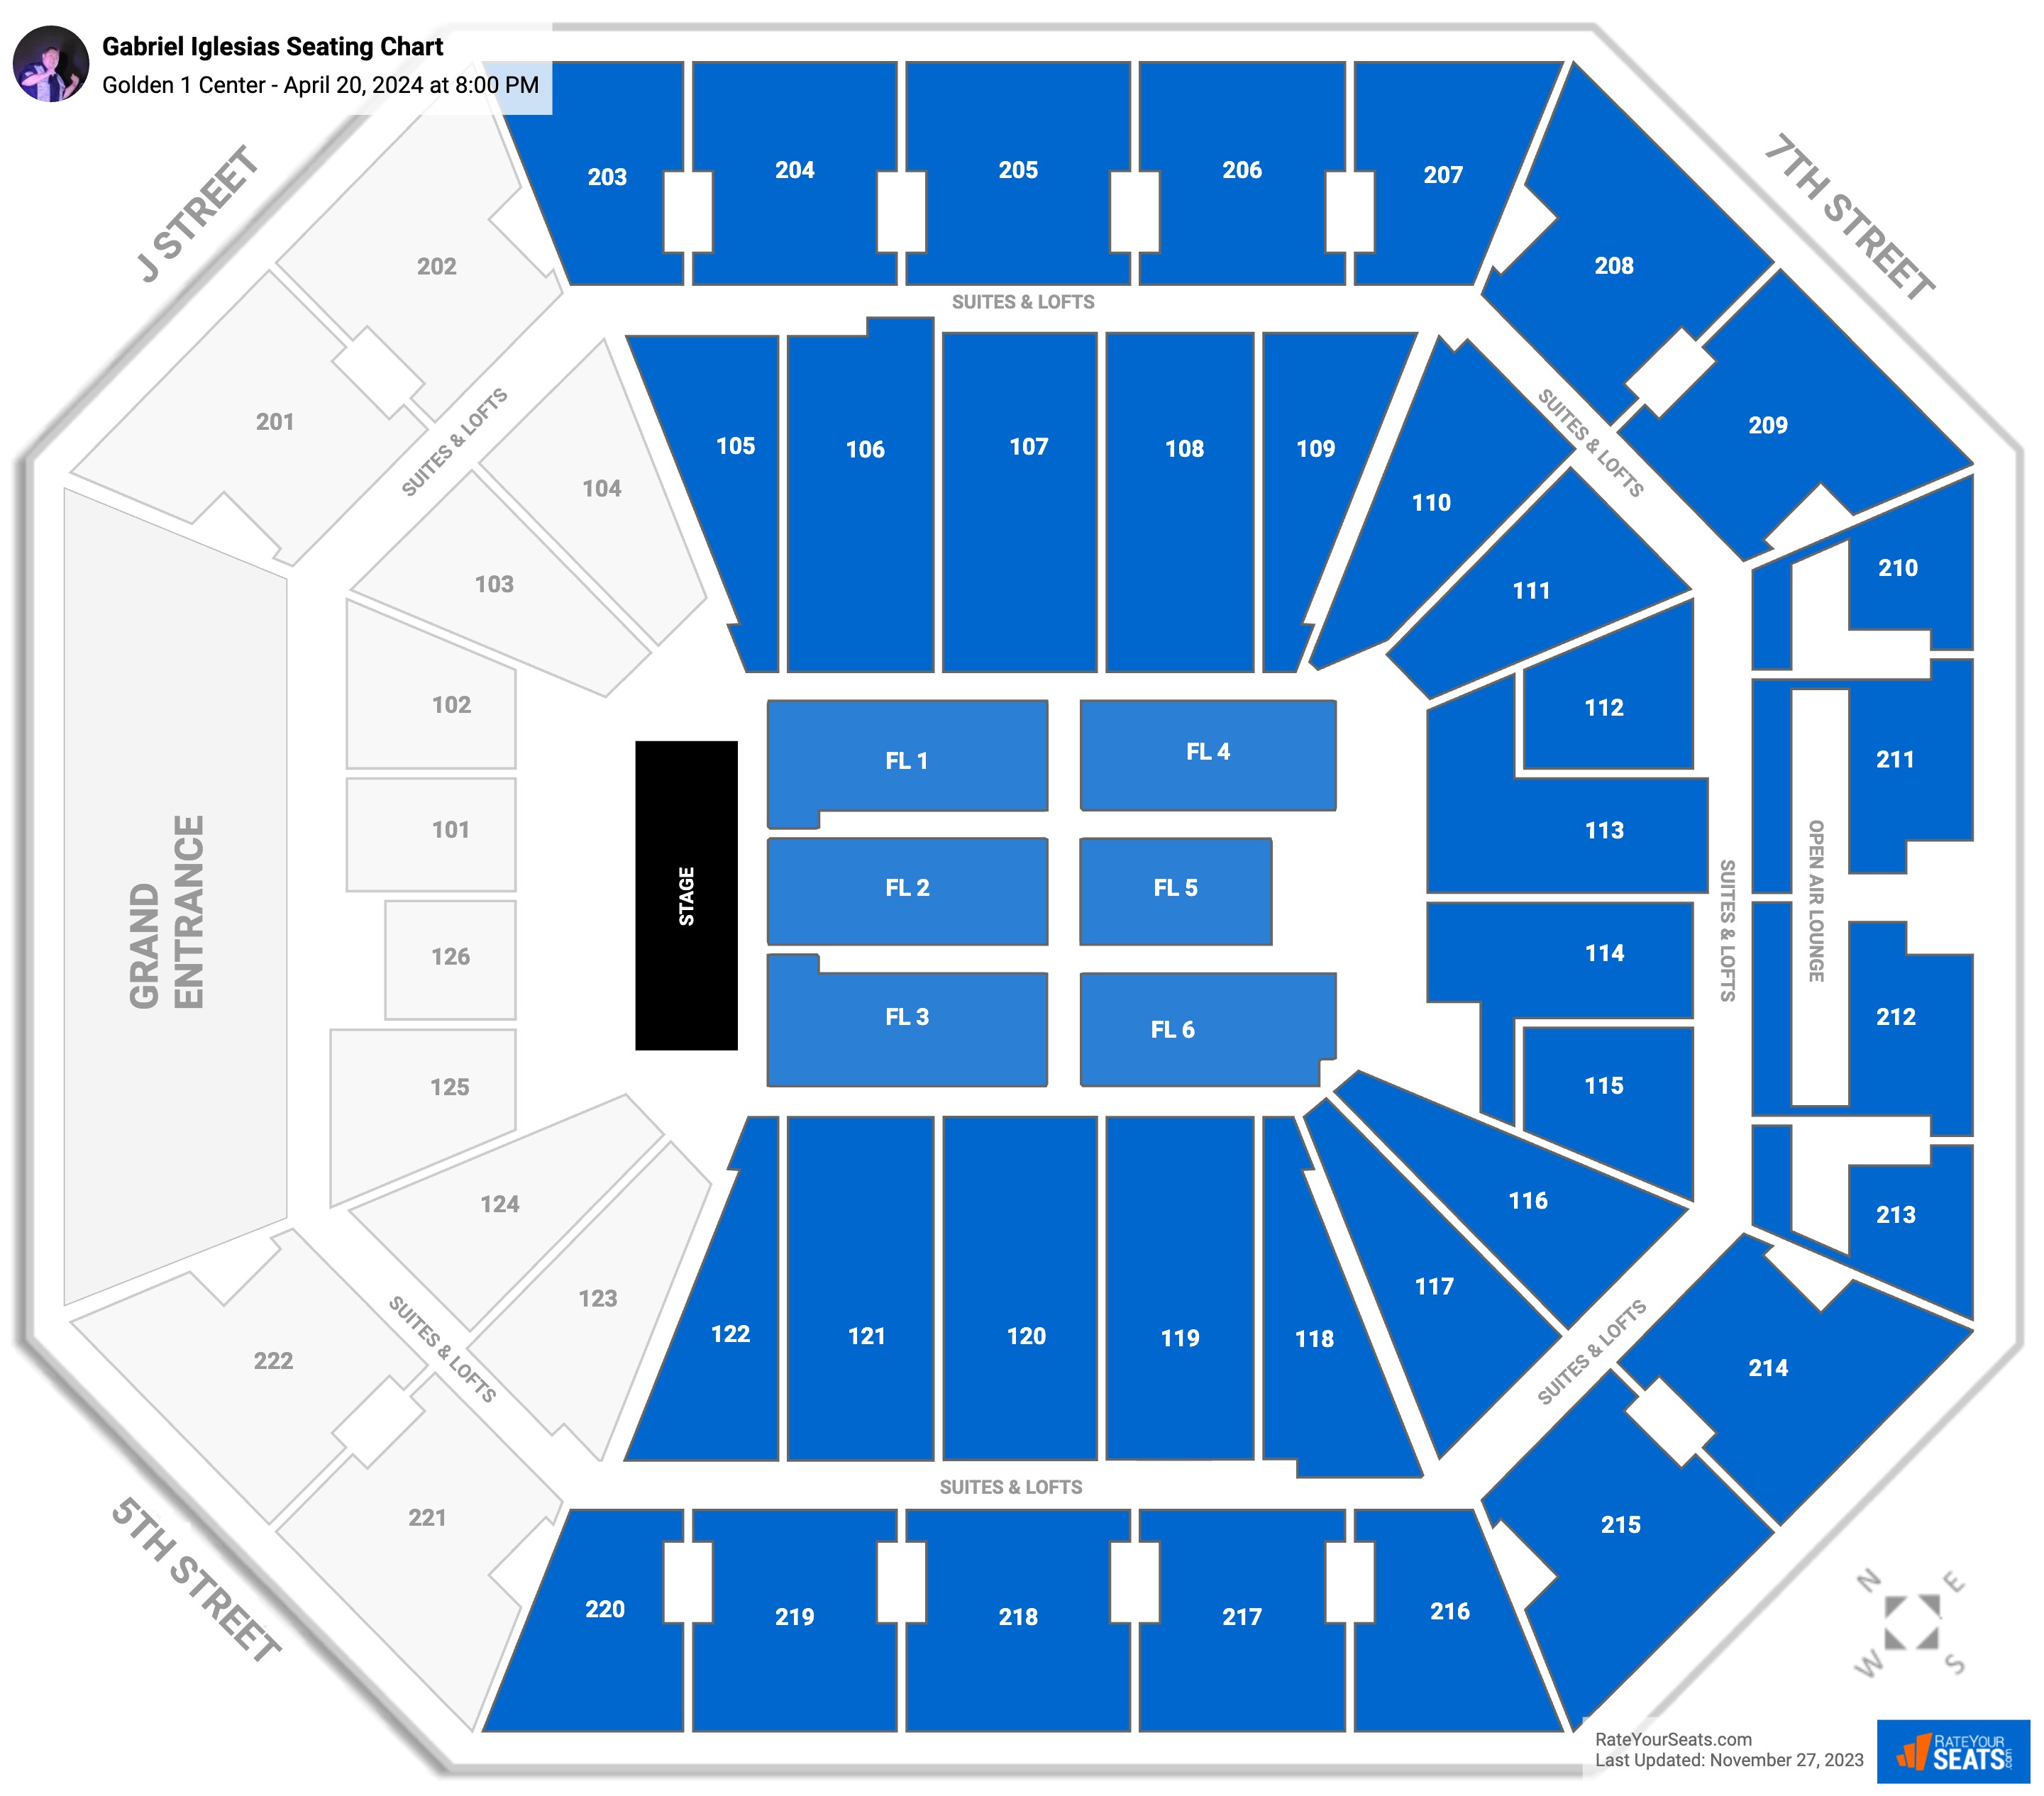 Golden 1 Center Concert Seating Chart Rateyourseats Com